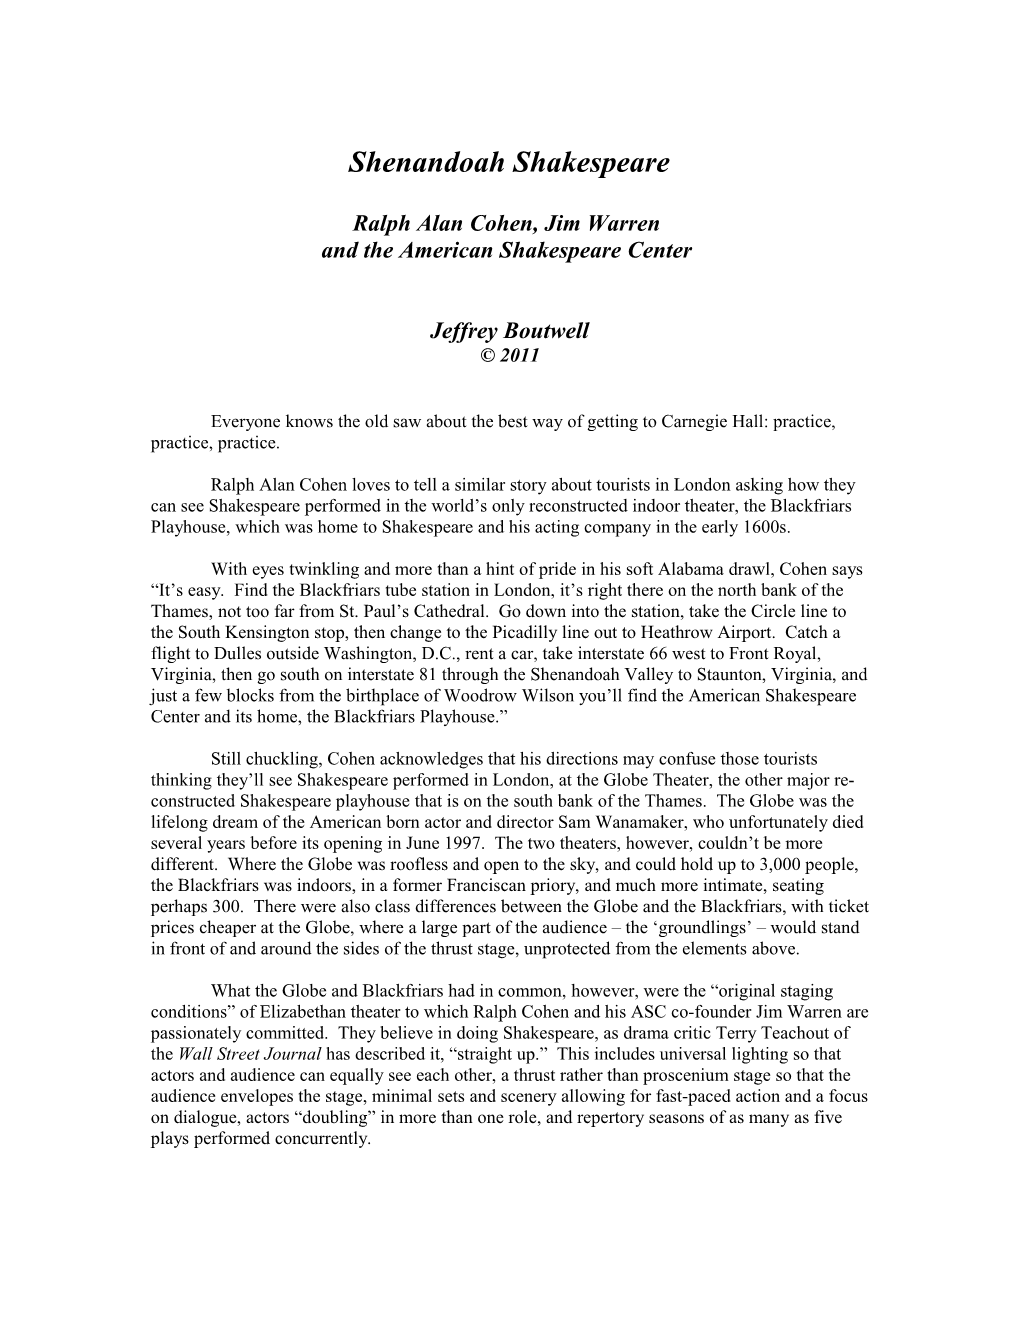 Ron Rosenbaum, the Shakespeare Wars